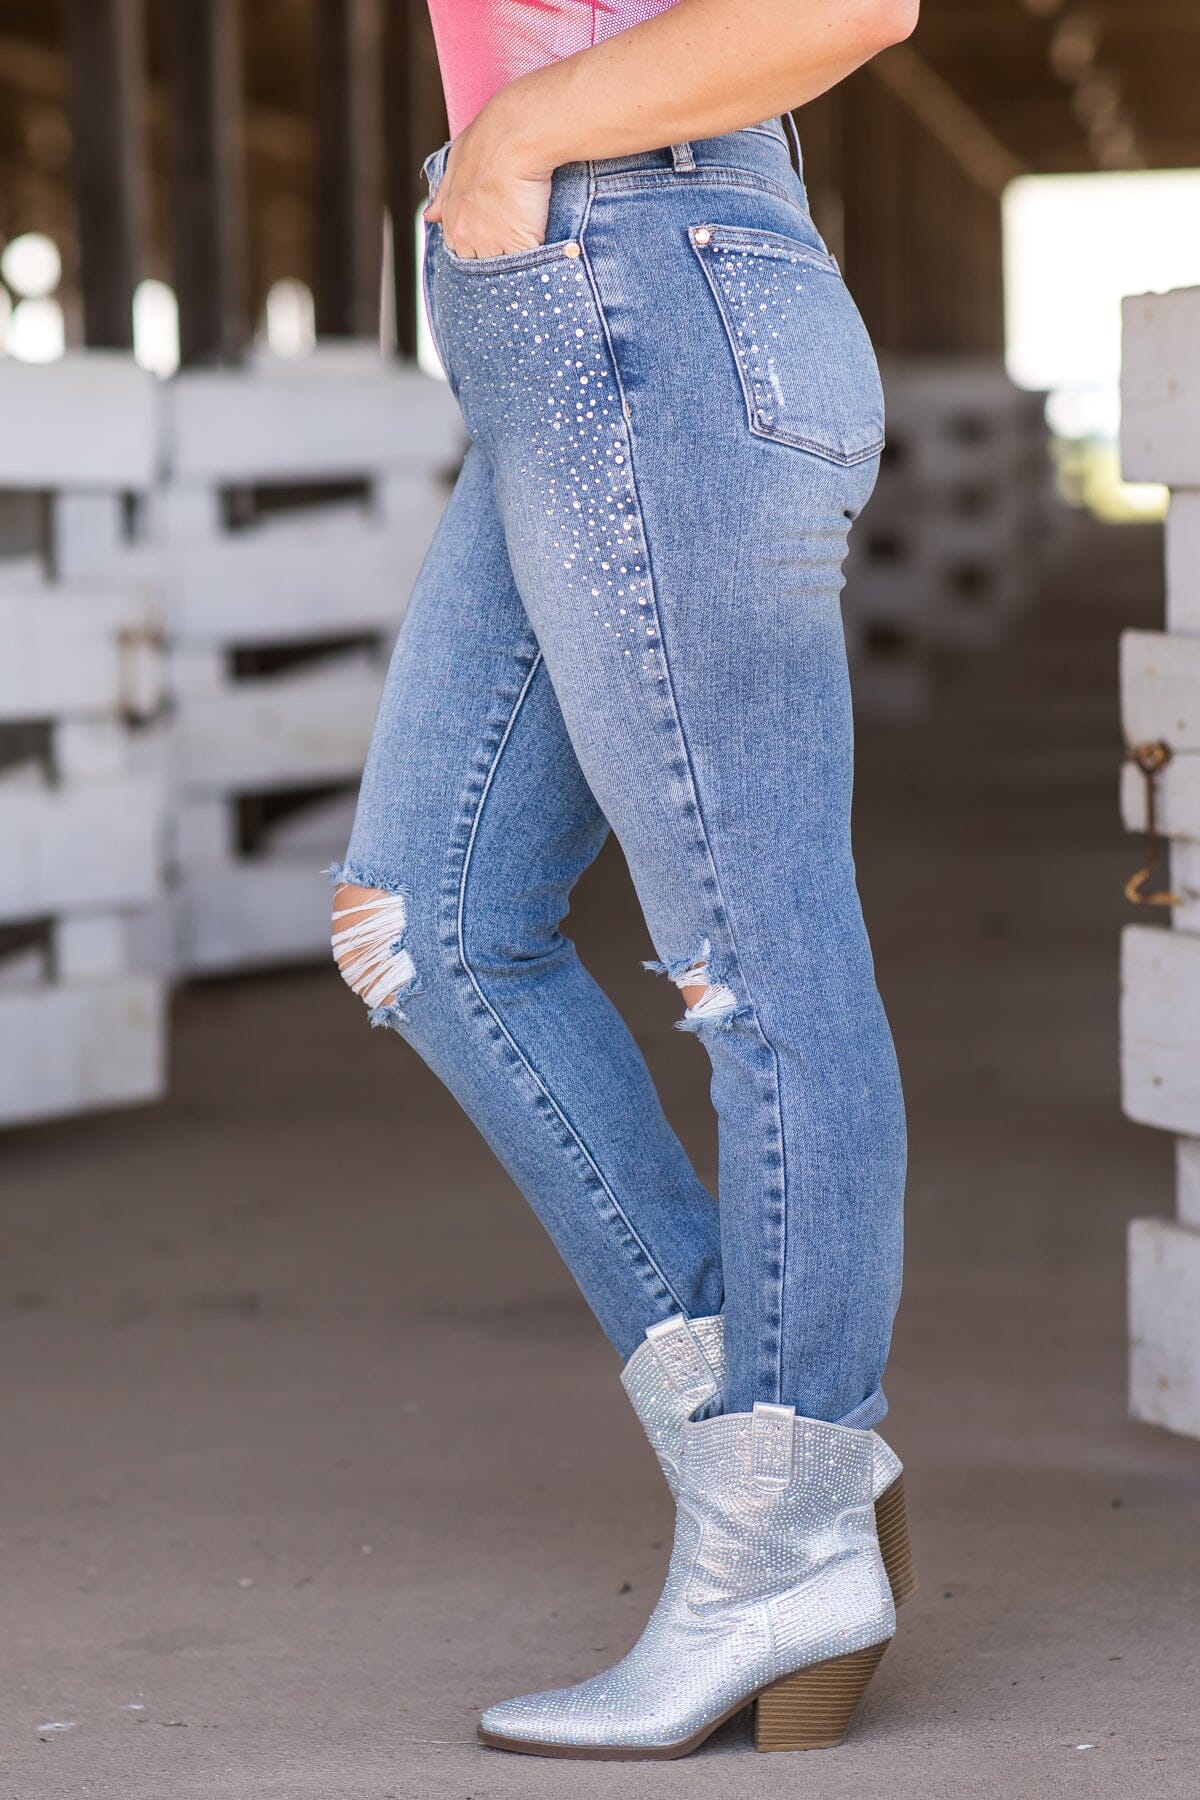 High-waist Jeans | Bedazzled jeans, High waist jeans, High waisted